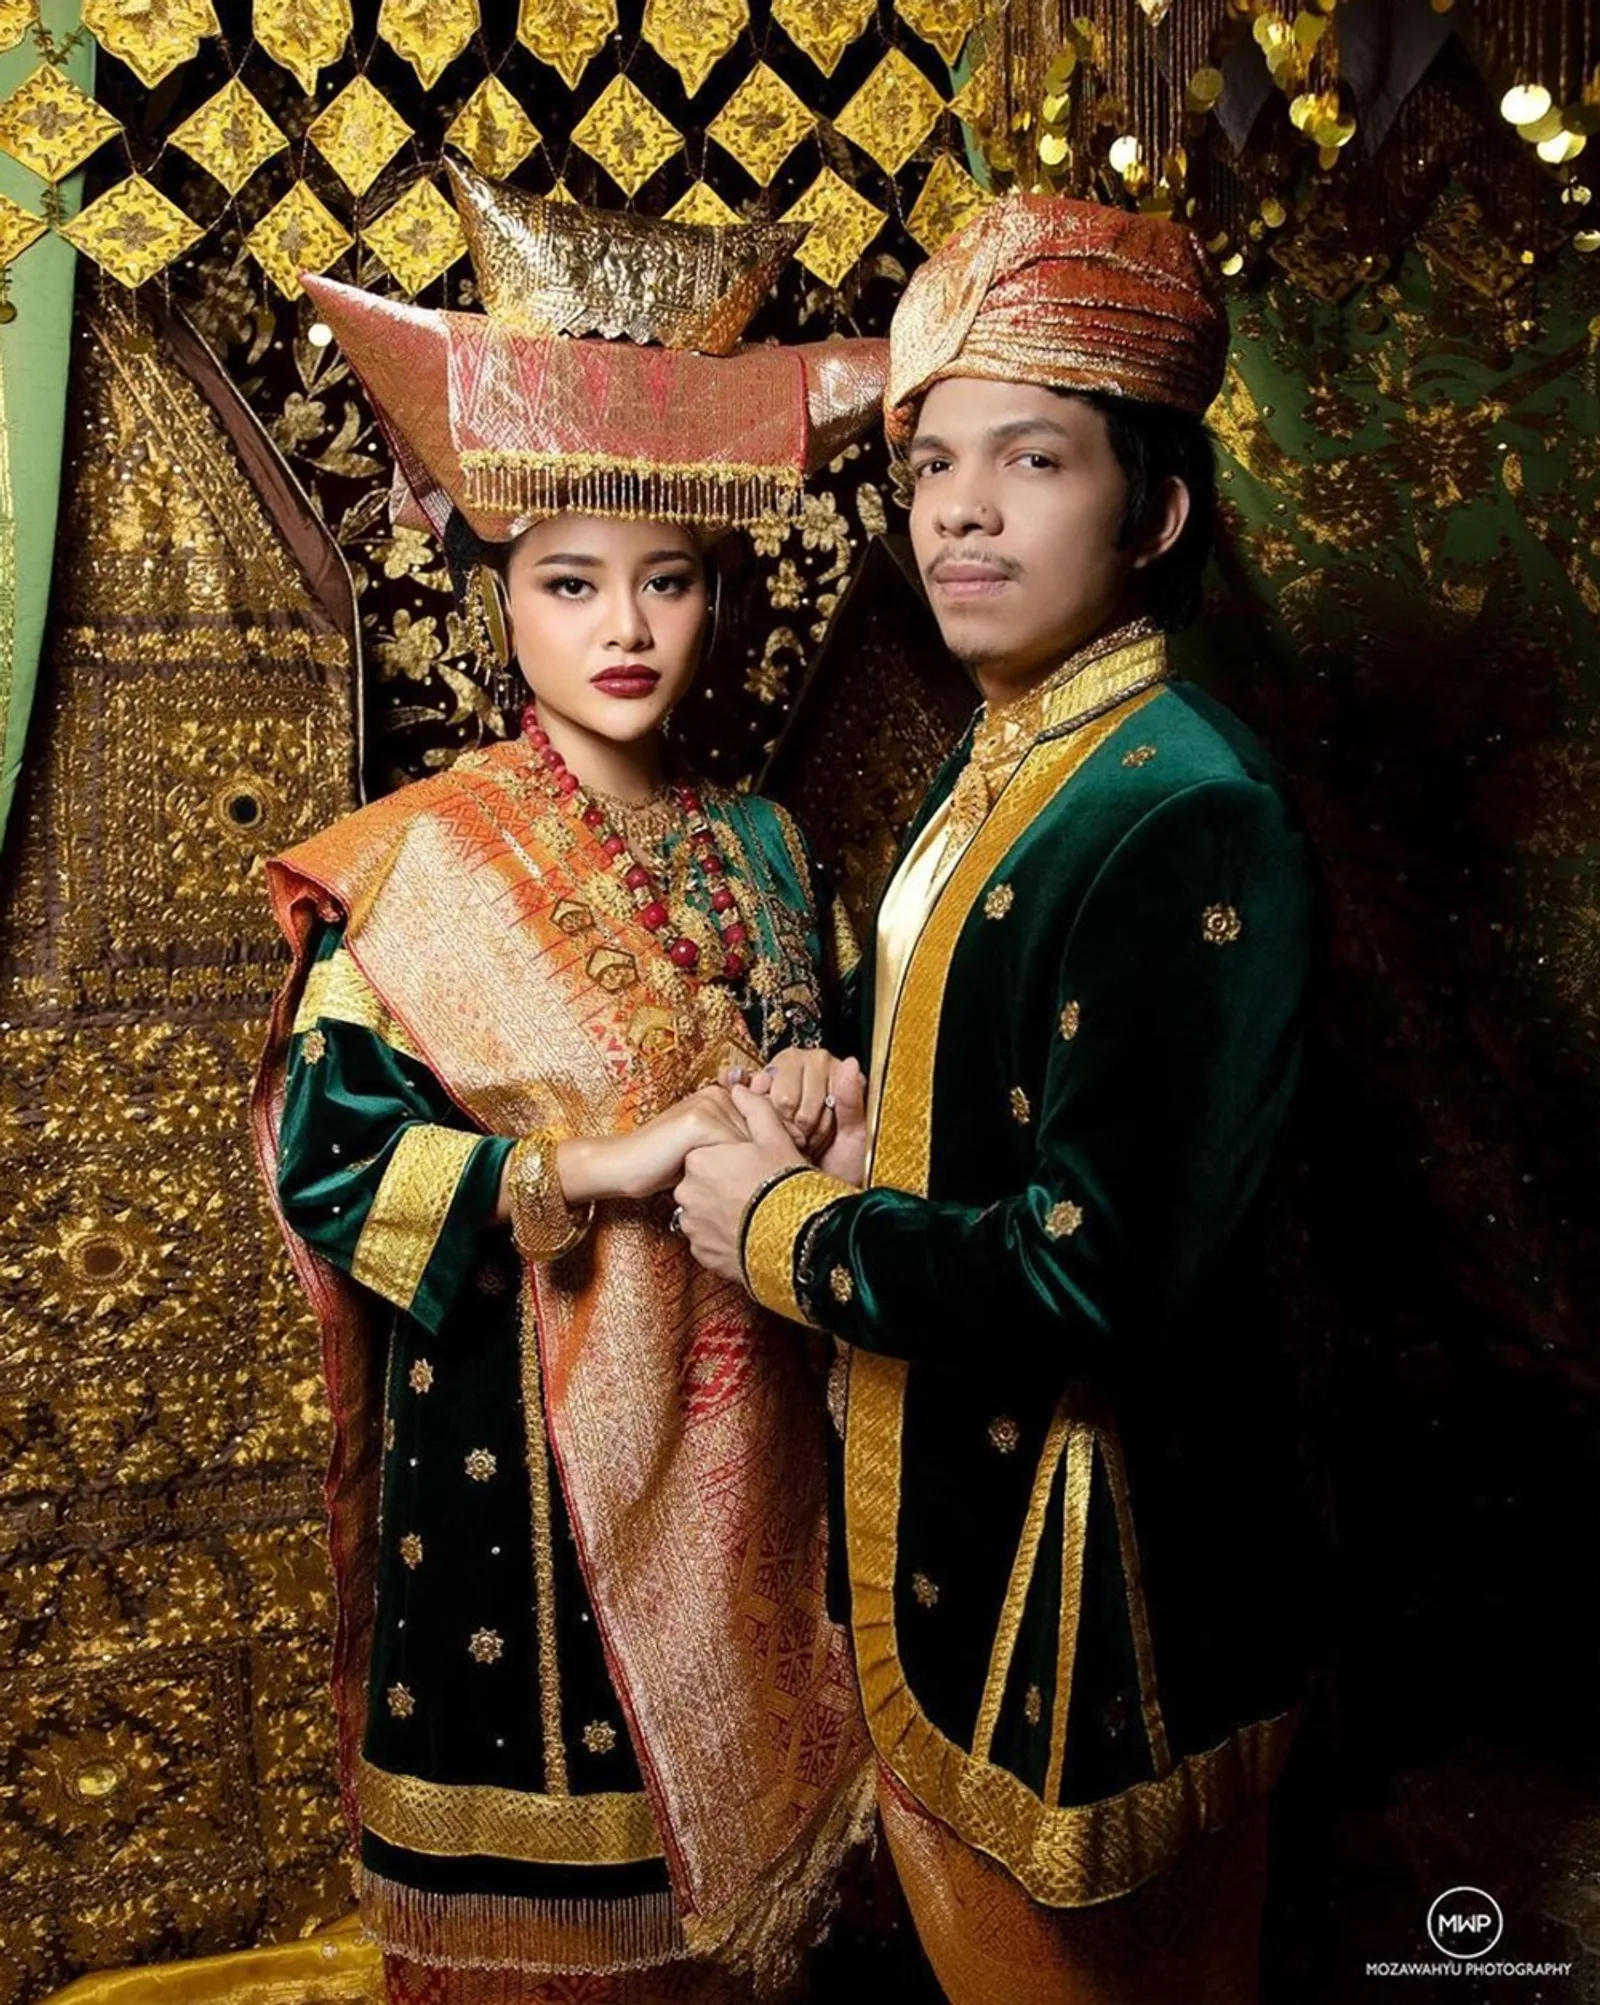 Gaya Pre-Wedding Aurel Hermansyah & Atta Halilintar, Mesra Banget!